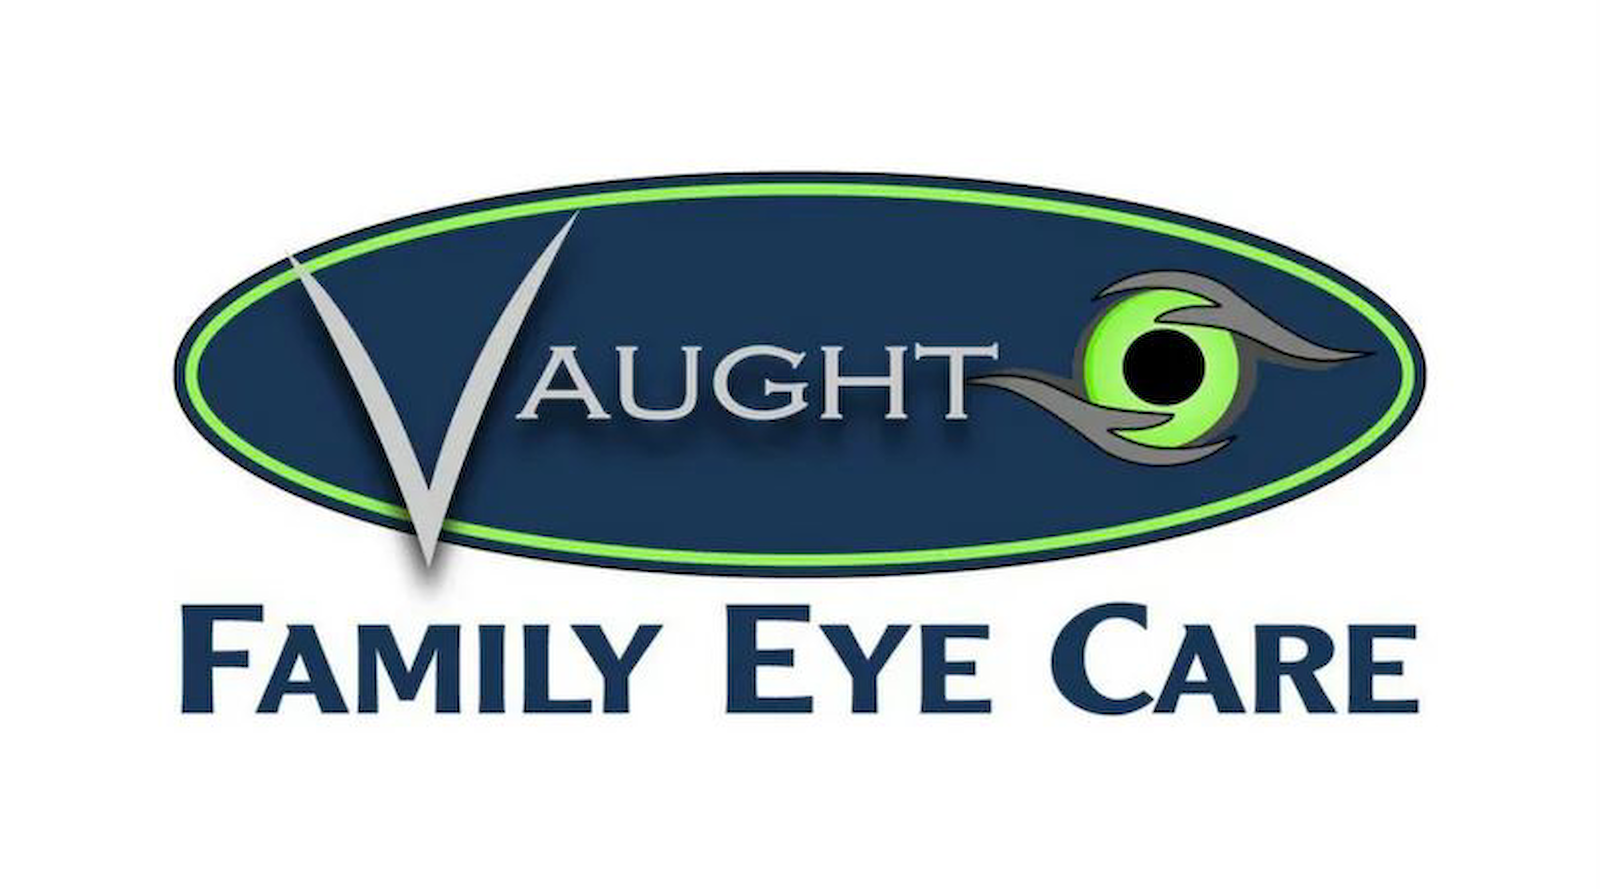 Vaught Family Eye Care